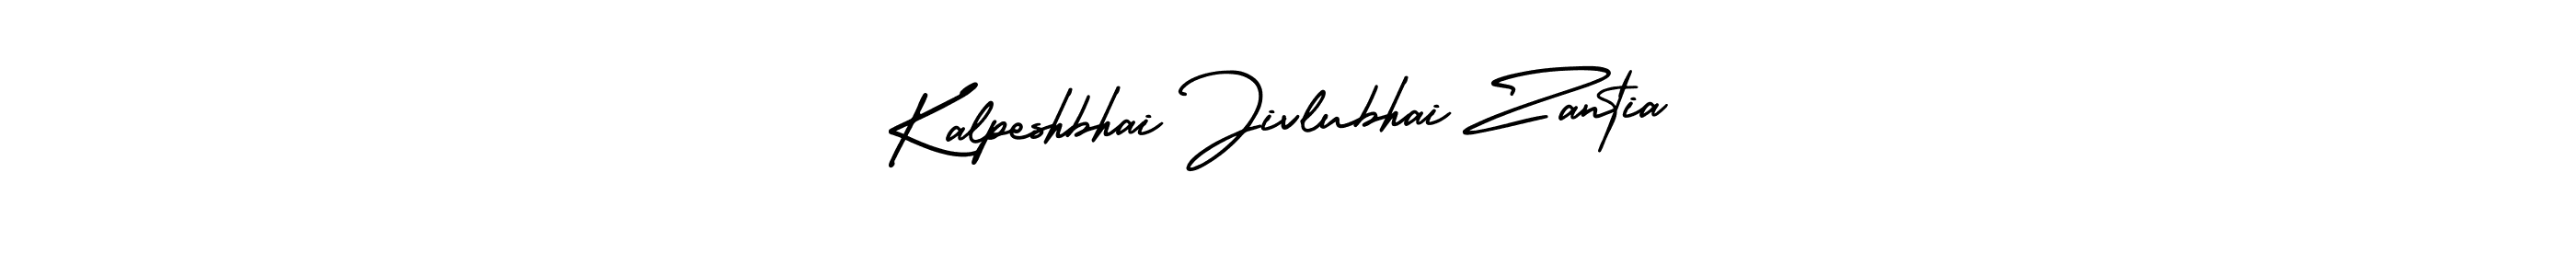 How to make Kalpeshbhai Jivlubhai Zantia signature? AmerikaSignatureDemo-Regular is a professional autograph style. Create handwritten signature for Kalpeshbhai Jivlubhai Zantia name. Kalpeshbhai Jivlubhai Zantia signature style 3 images and pictures png